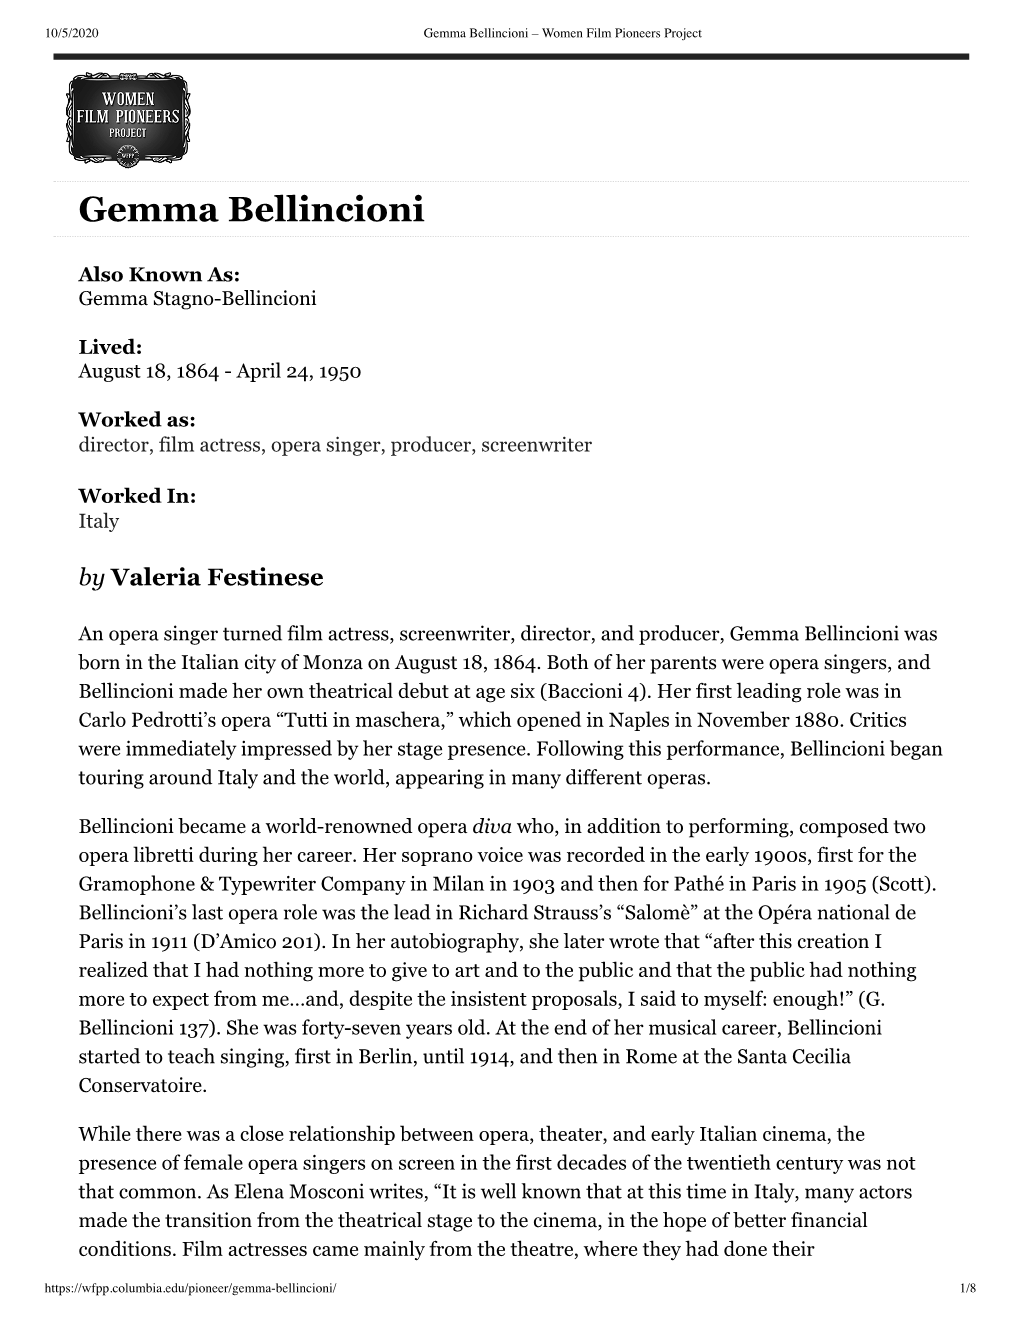 Gemma Bellincioni – Women Film Pioneers Project